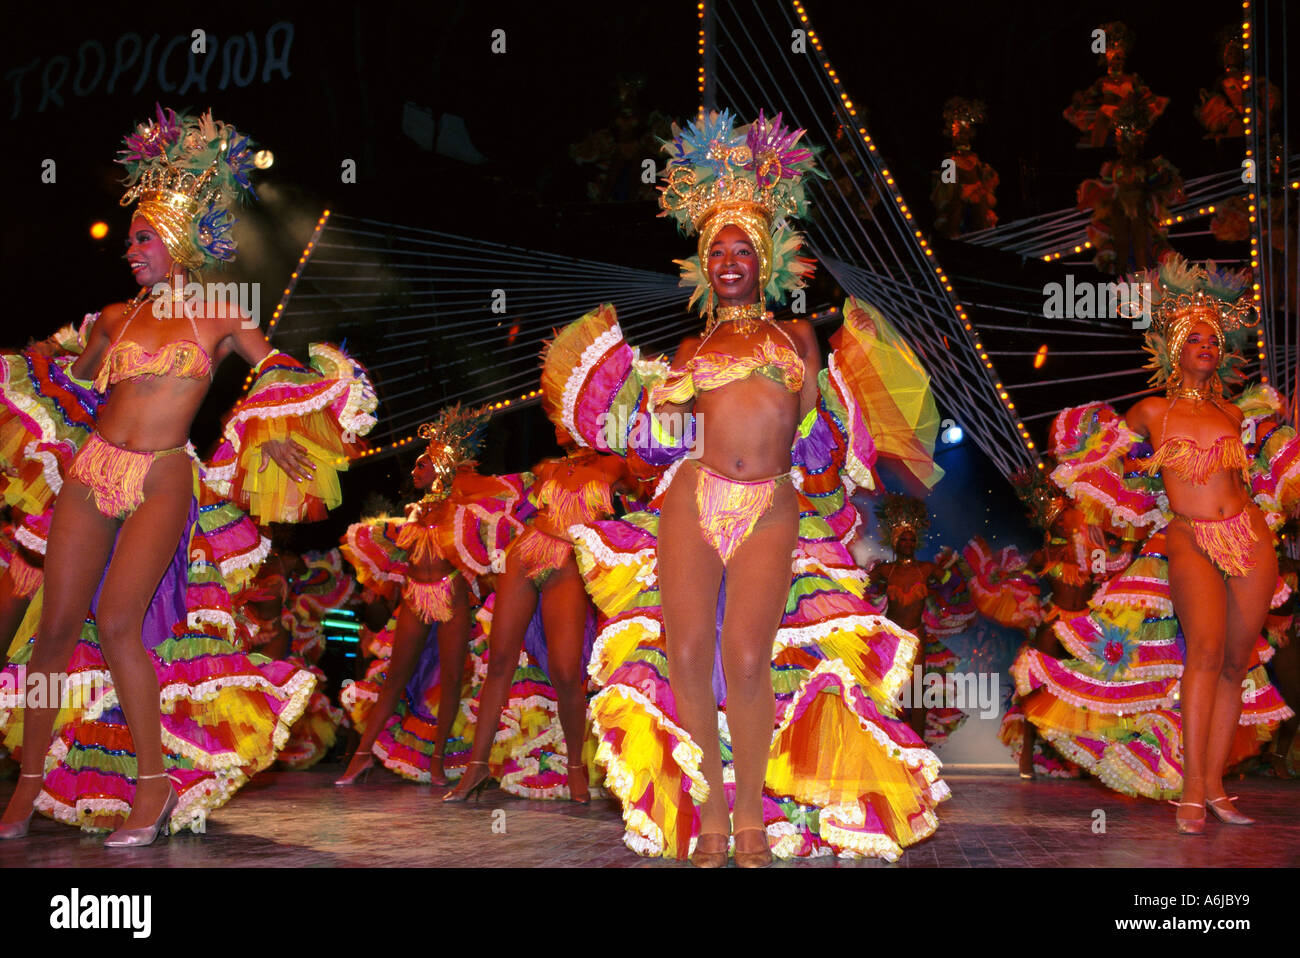 Caribbean Cuba Tropicana Cabaret Stock Photo